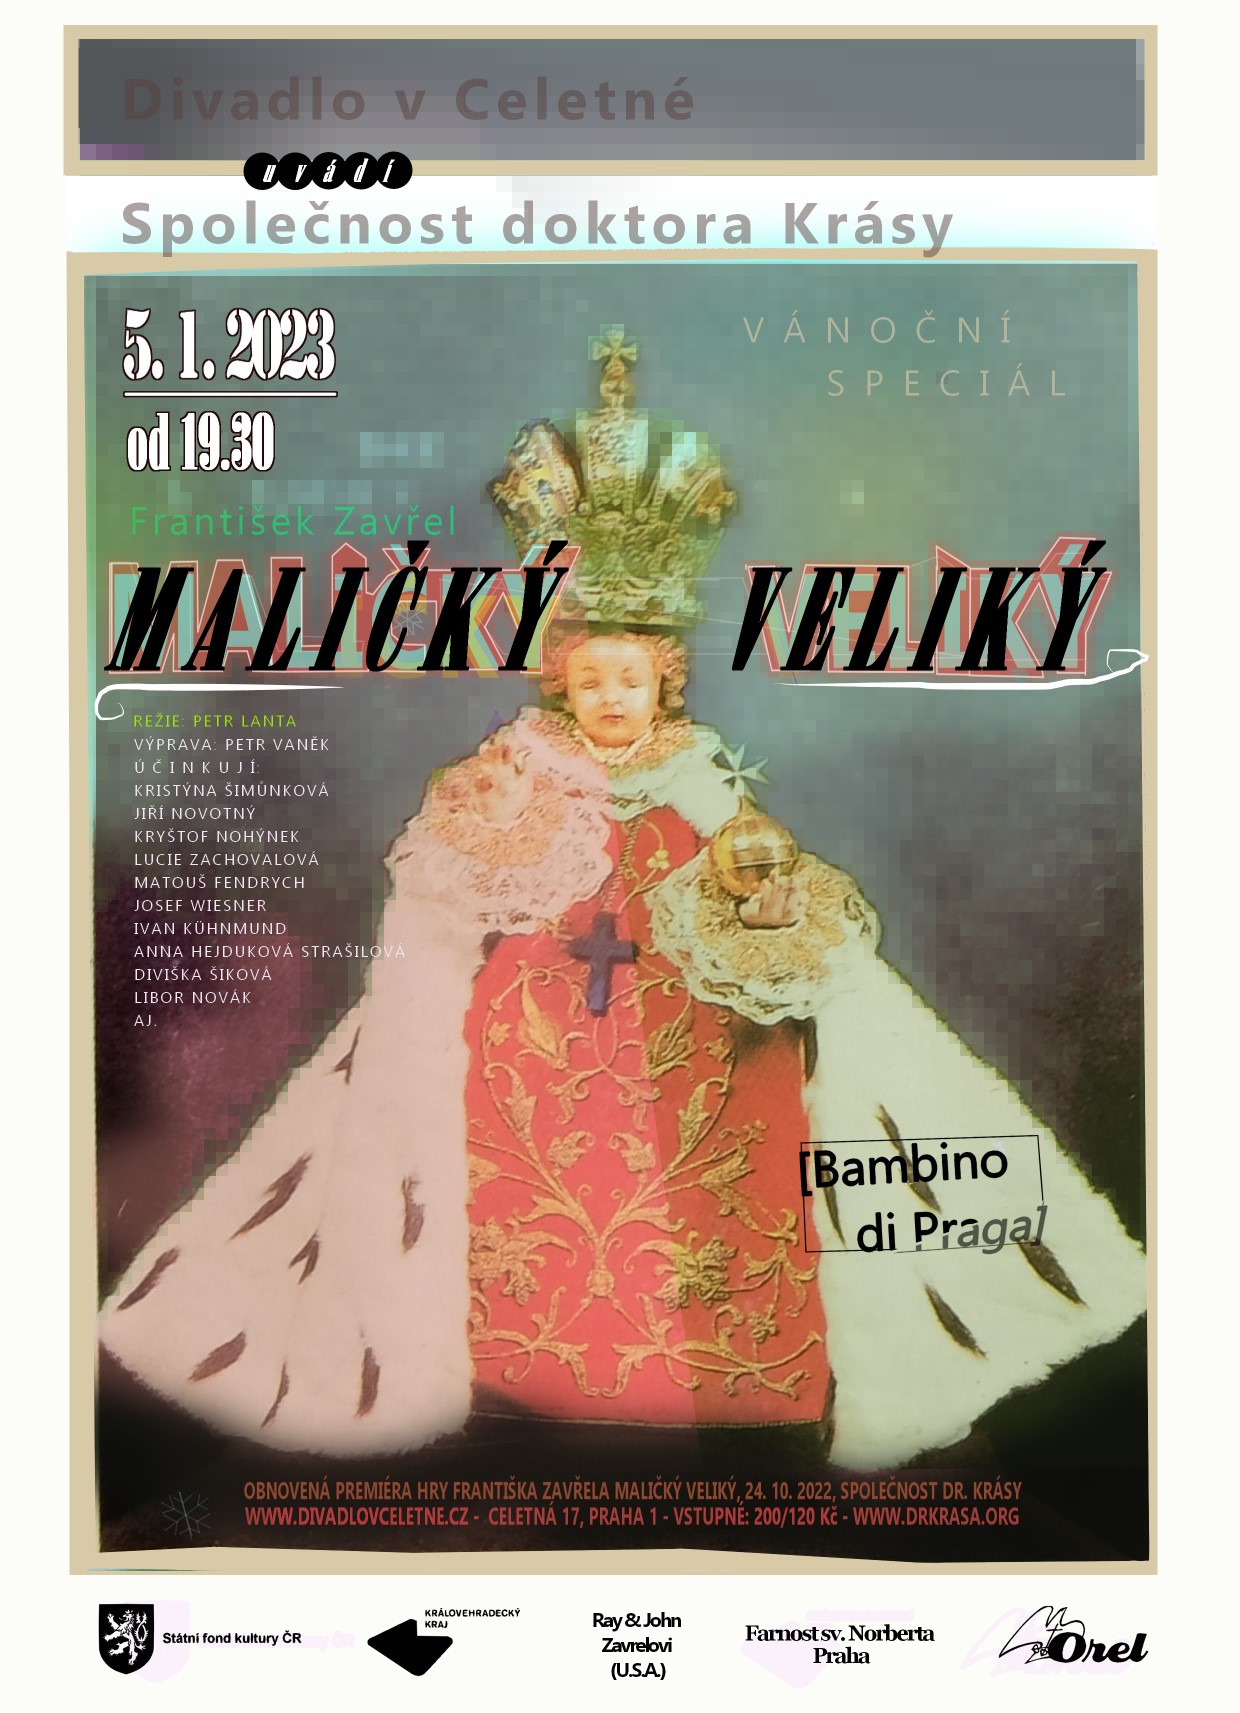 Plakát na vánoční reprízu inscenace Maličký veliký (Bambino di Praga) 5. 1. 2023 v Divadle v Celetné